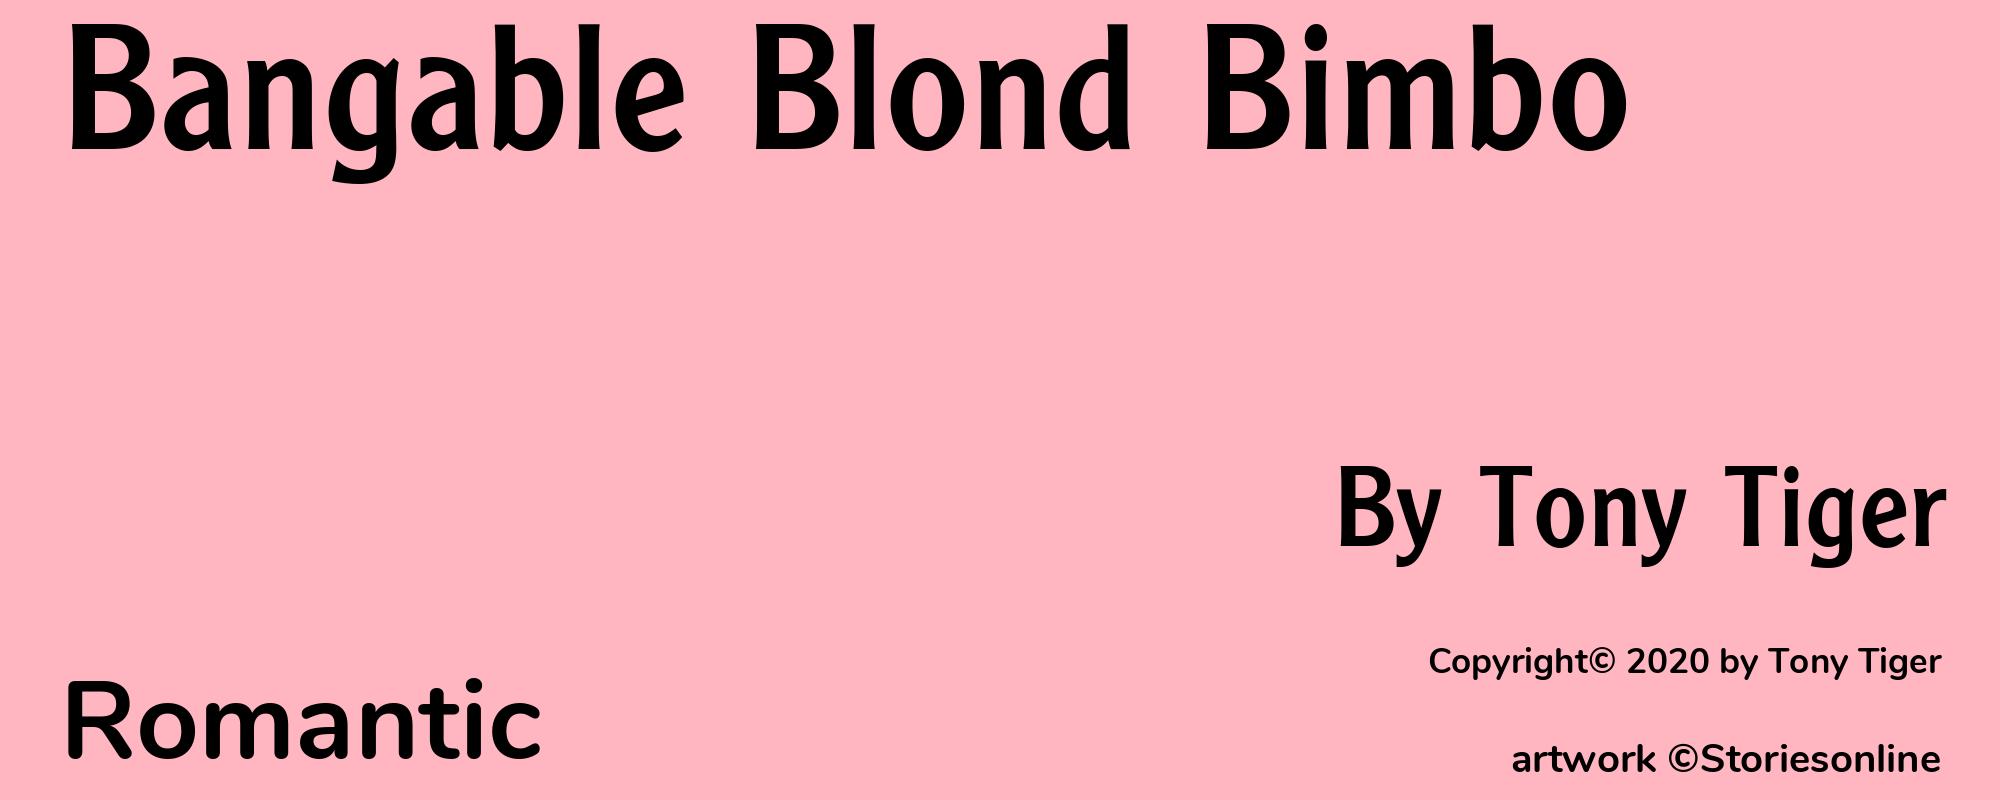 Bangable Blond Bimbo - Cover